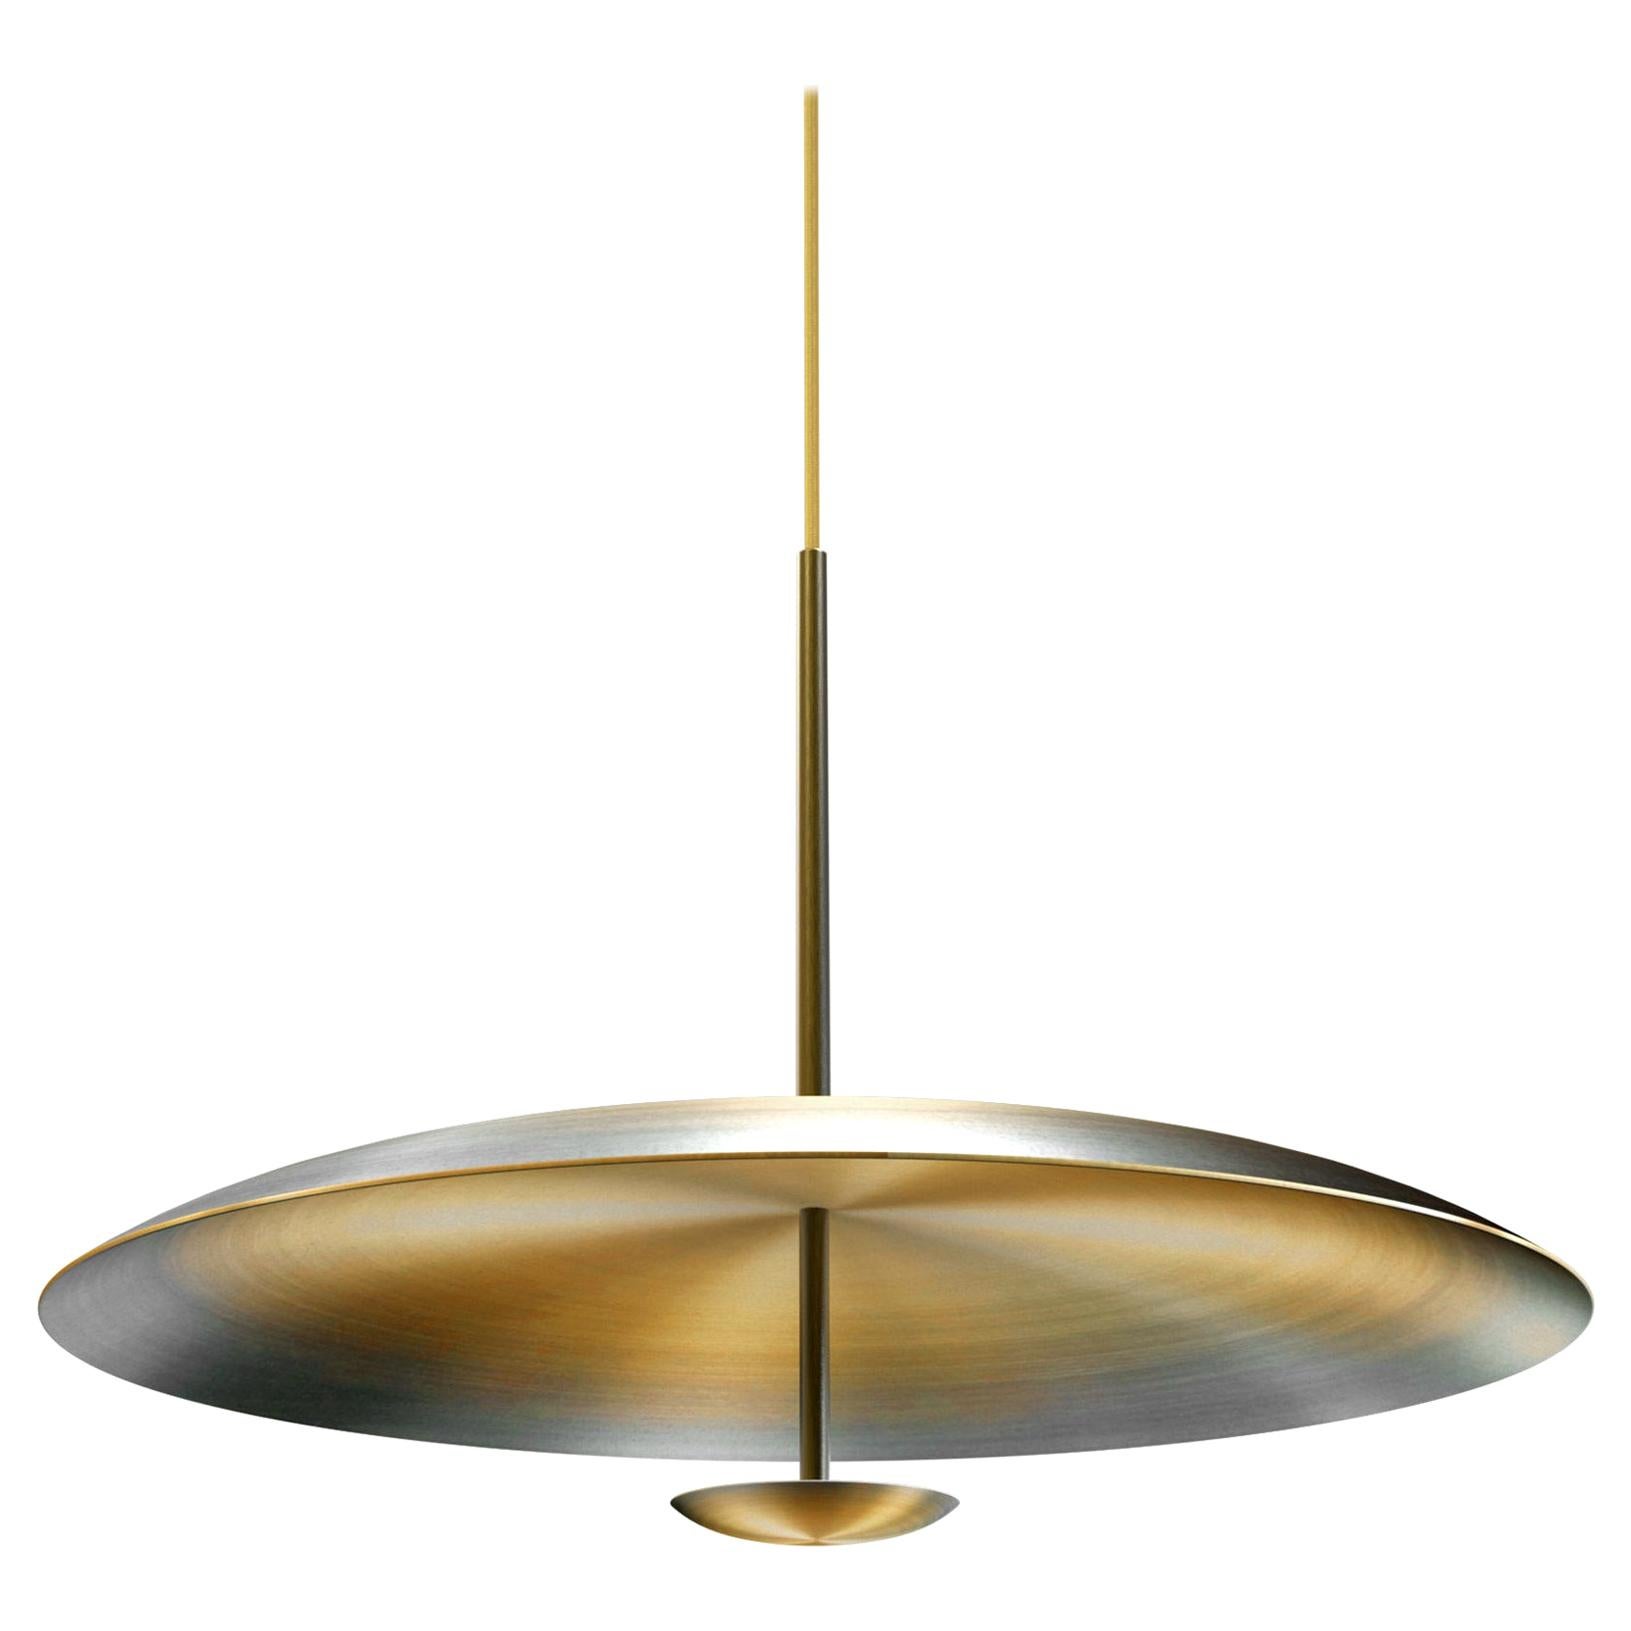 'Cosmic Ore' Gradient Patina Brass Pendant Lamp Chandelier, Sample Sale